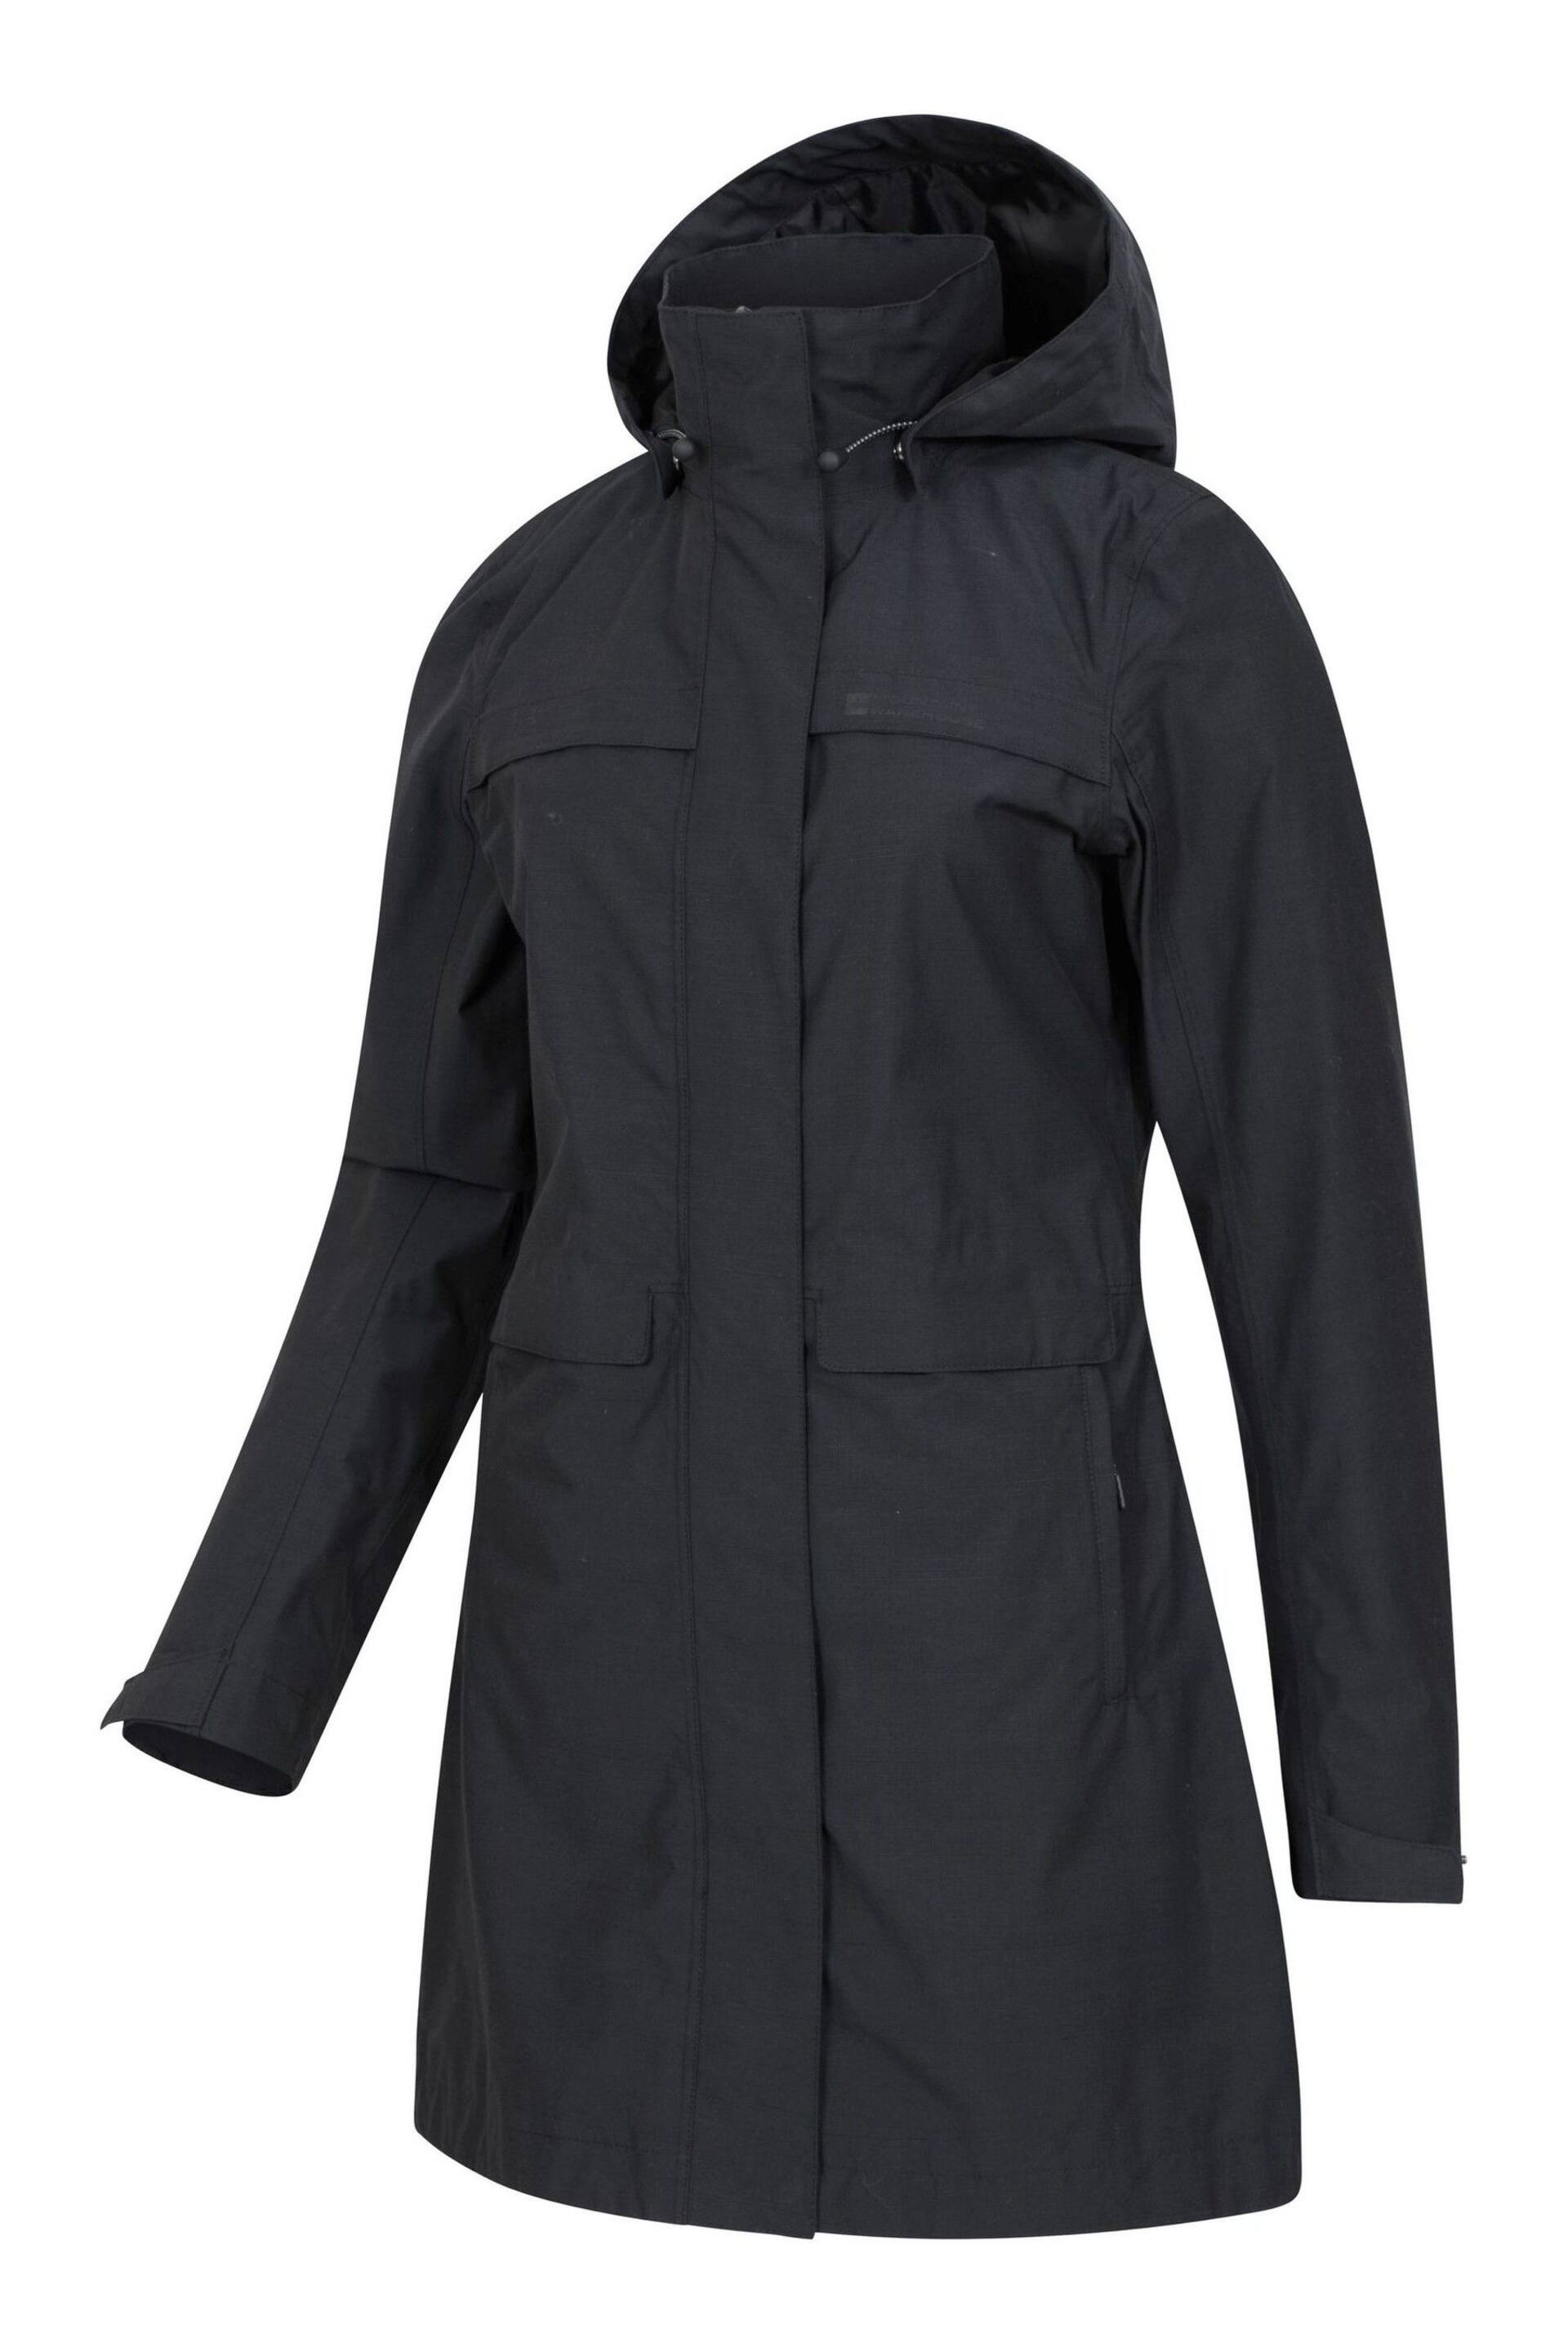 Mountain Warehouse Black Cloud Burst Textured Waterproof Jacket - Womens - Image 4 of 6